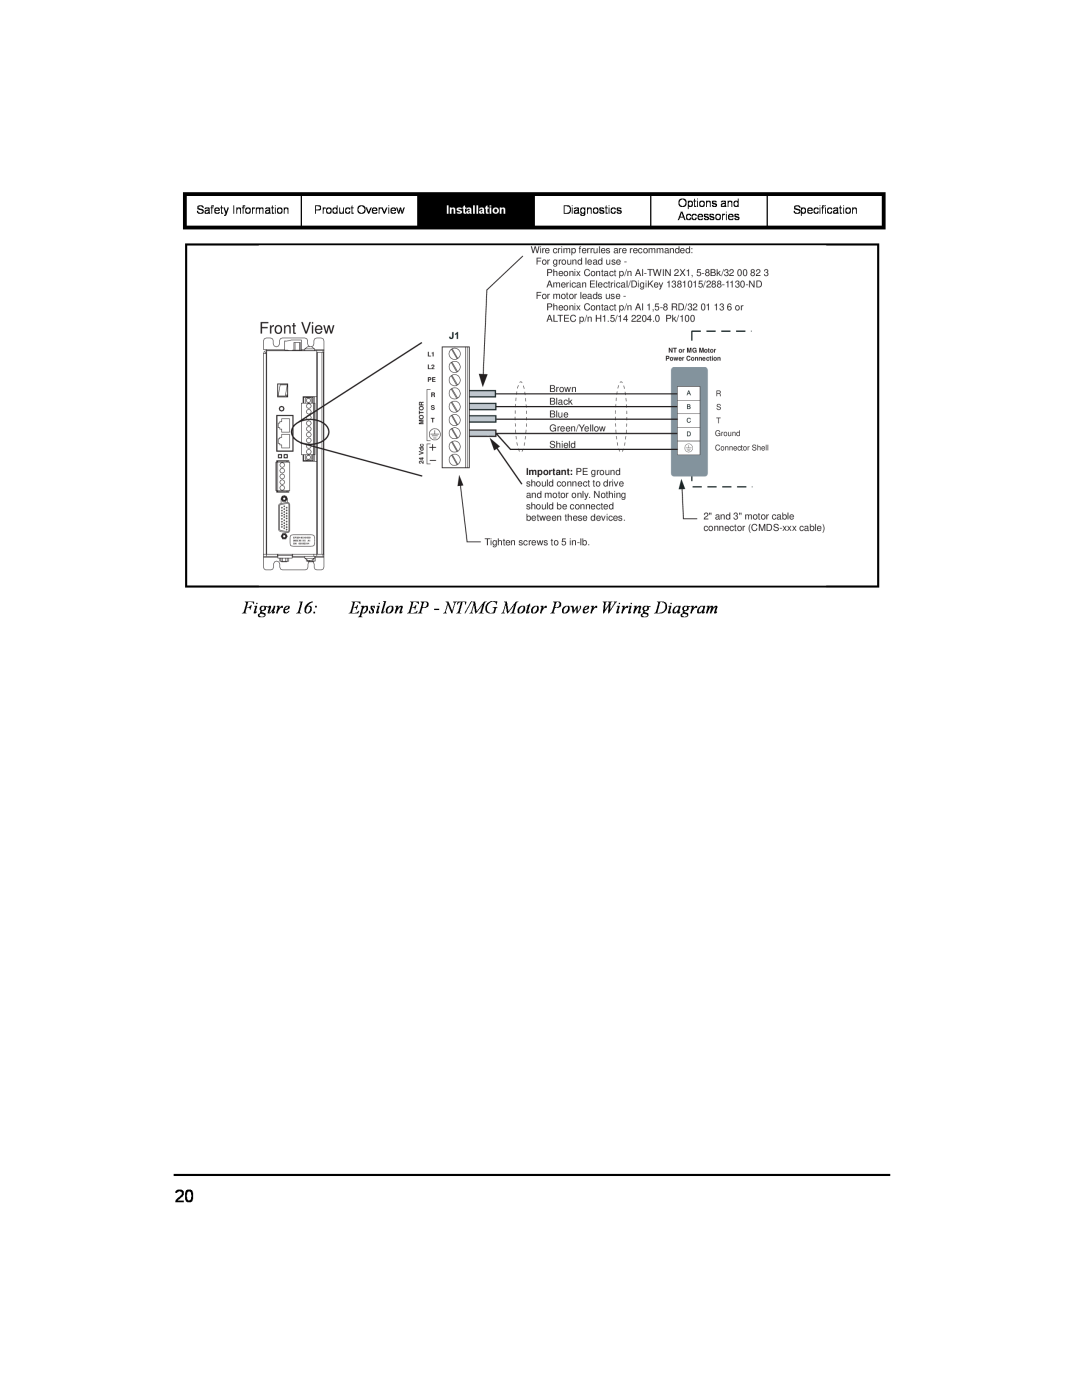 Emerson 400518-01 installation manual Epsilon EP - NT/MG Motor Power Wiring Diagram, Front View, Installation 